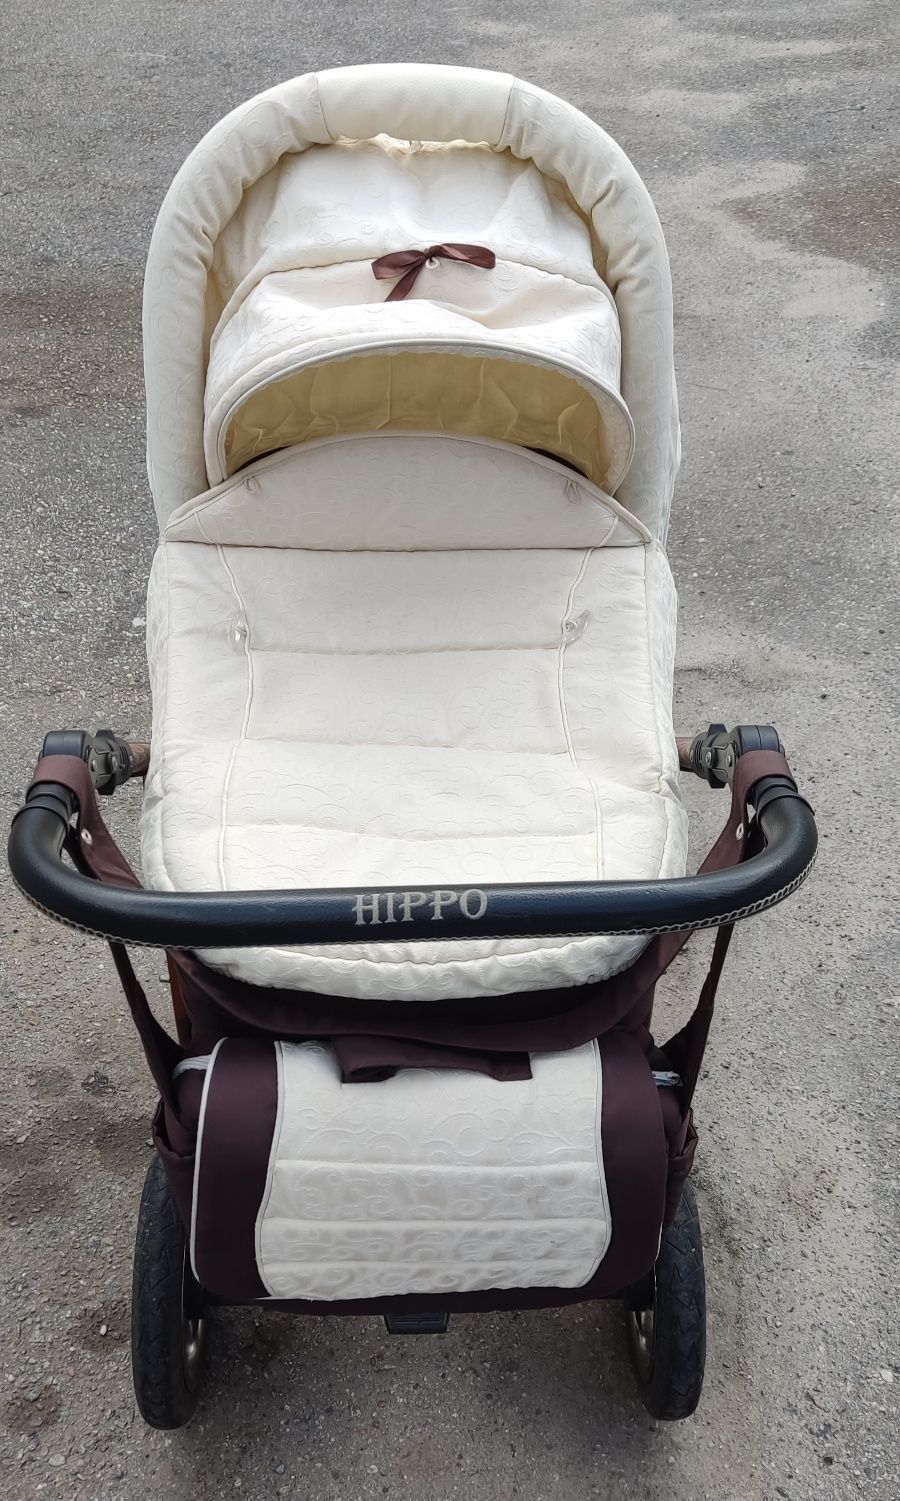 Дитяча коляска HIPPO 2 в 1